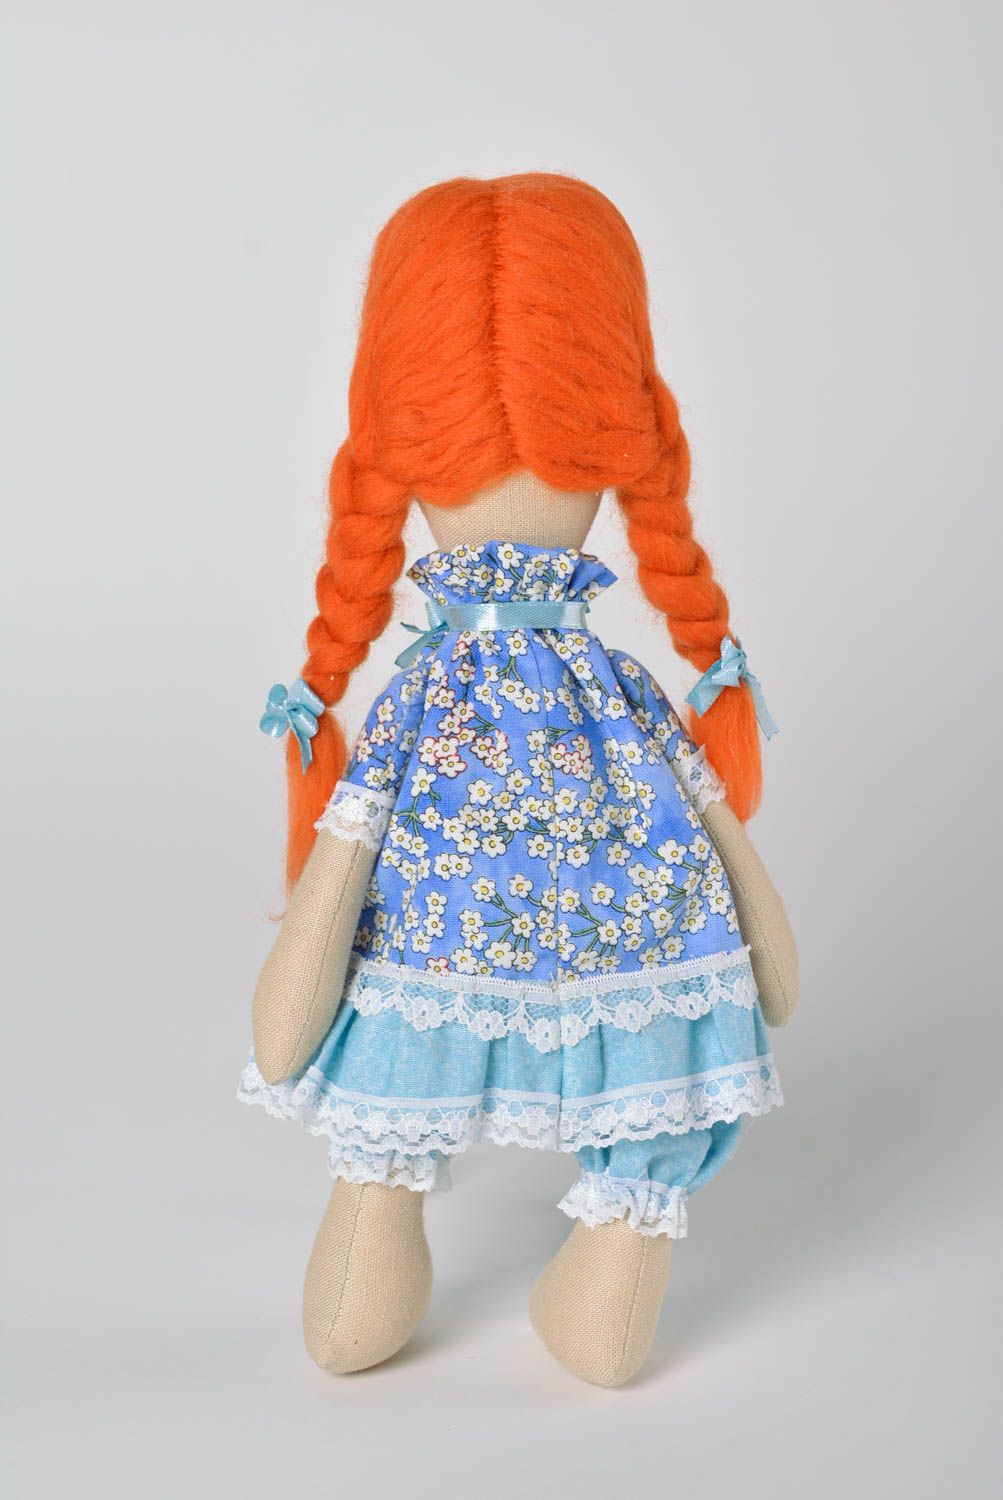 Handmade fabric doll decorative stuffed toy present for children nursery decor photo 3